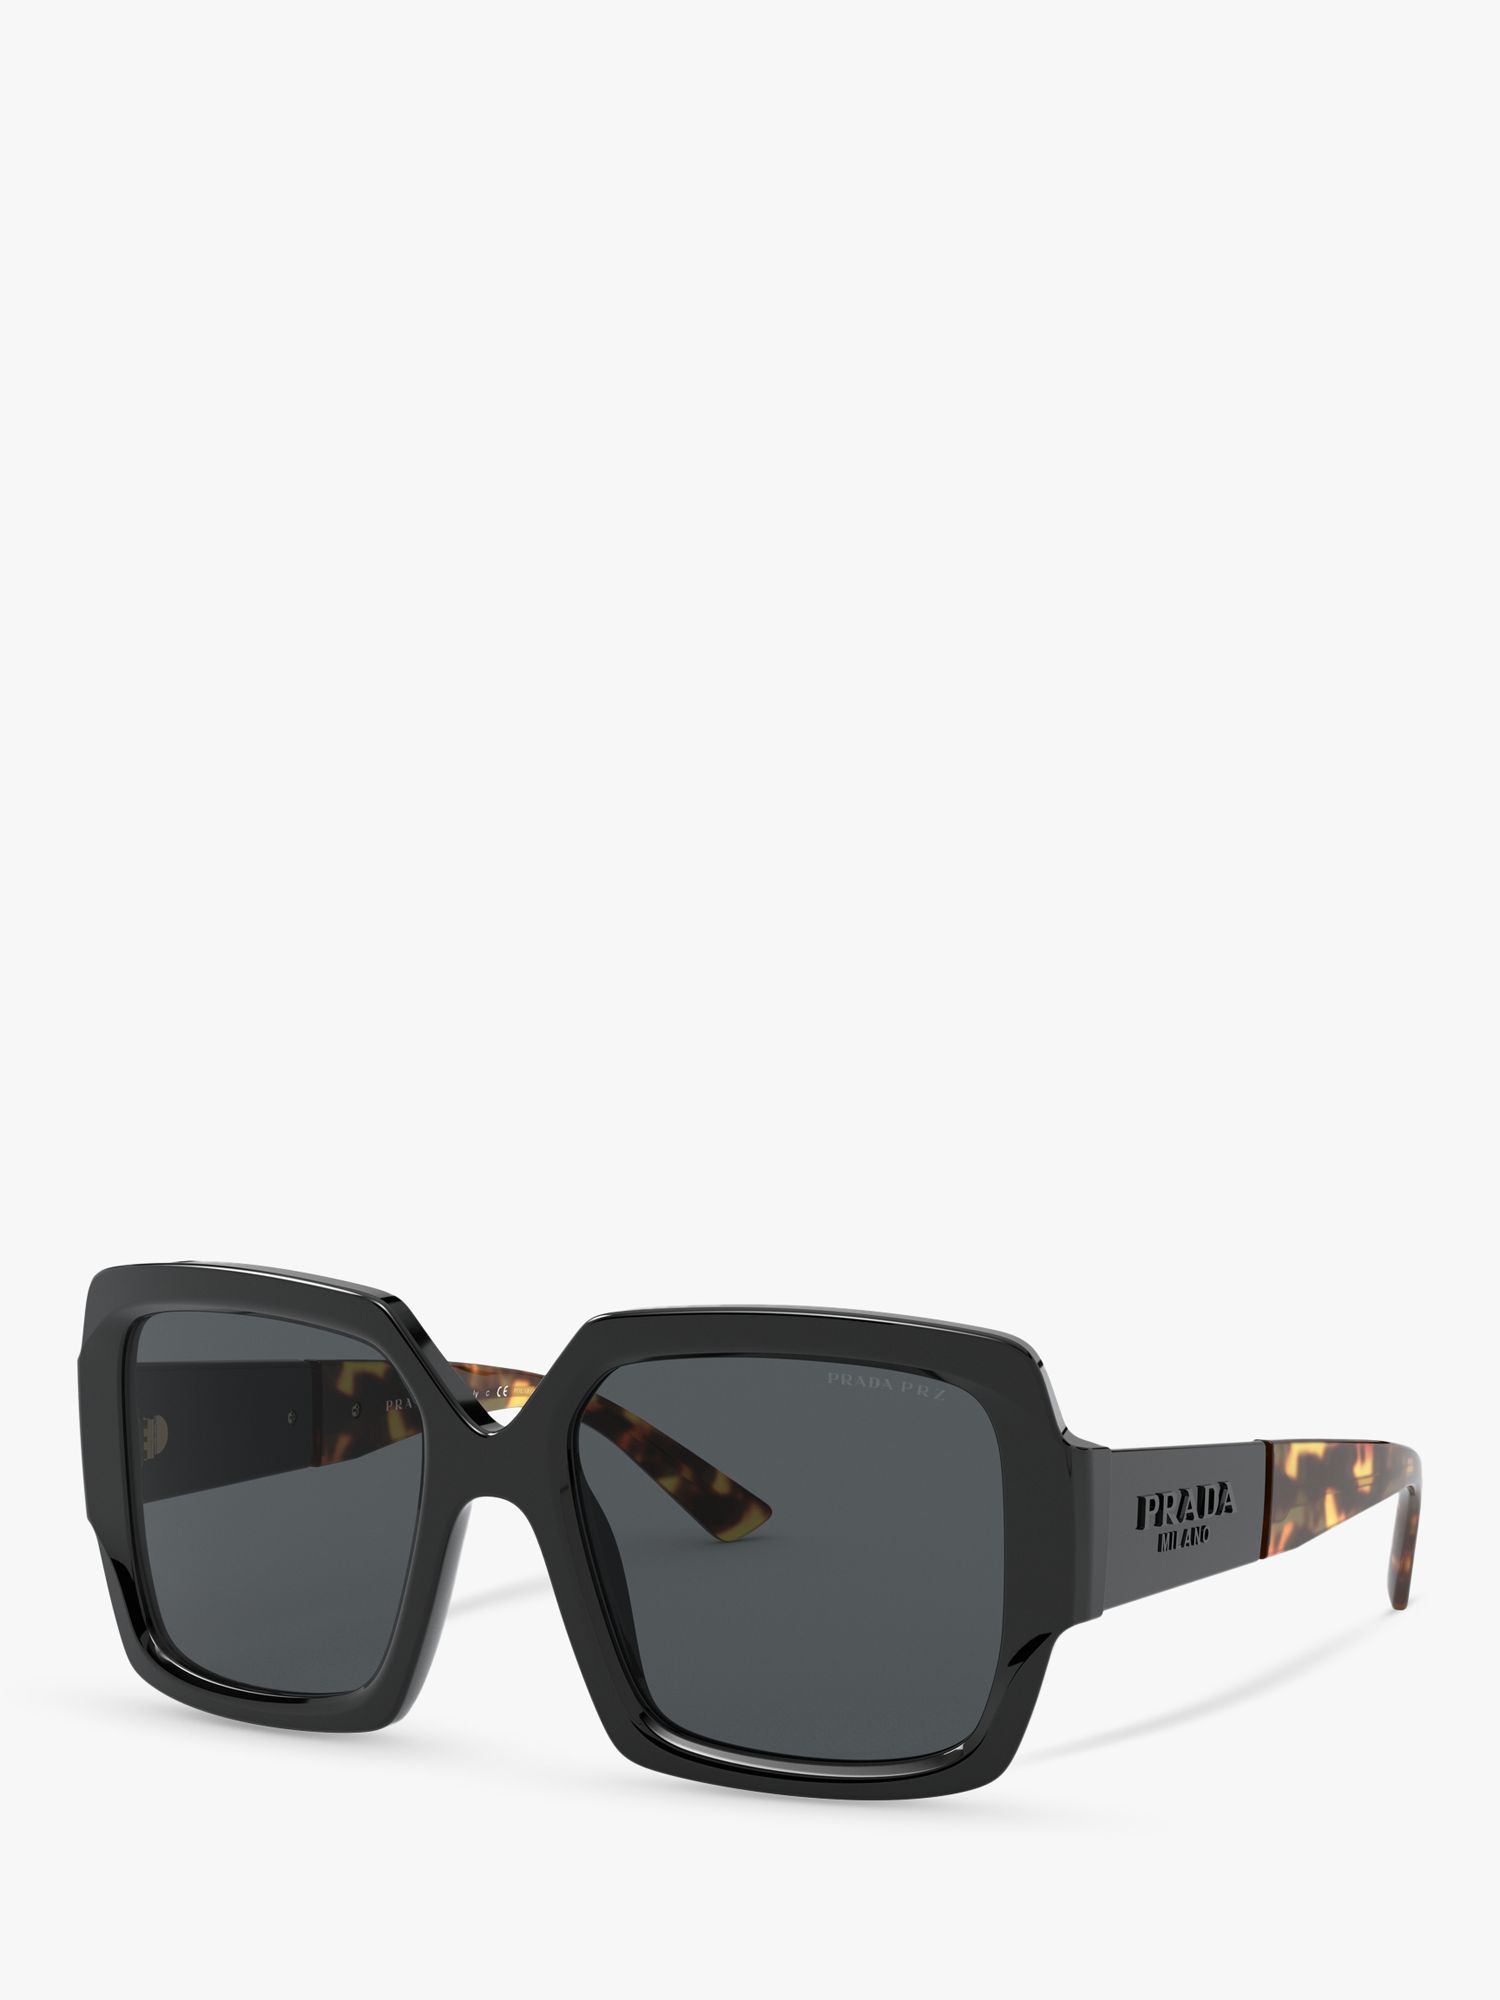 Prada PR 21XS Women's Polarised Chunky Square Sunglasses, Matte Black/Grey at John Lewis & Partners